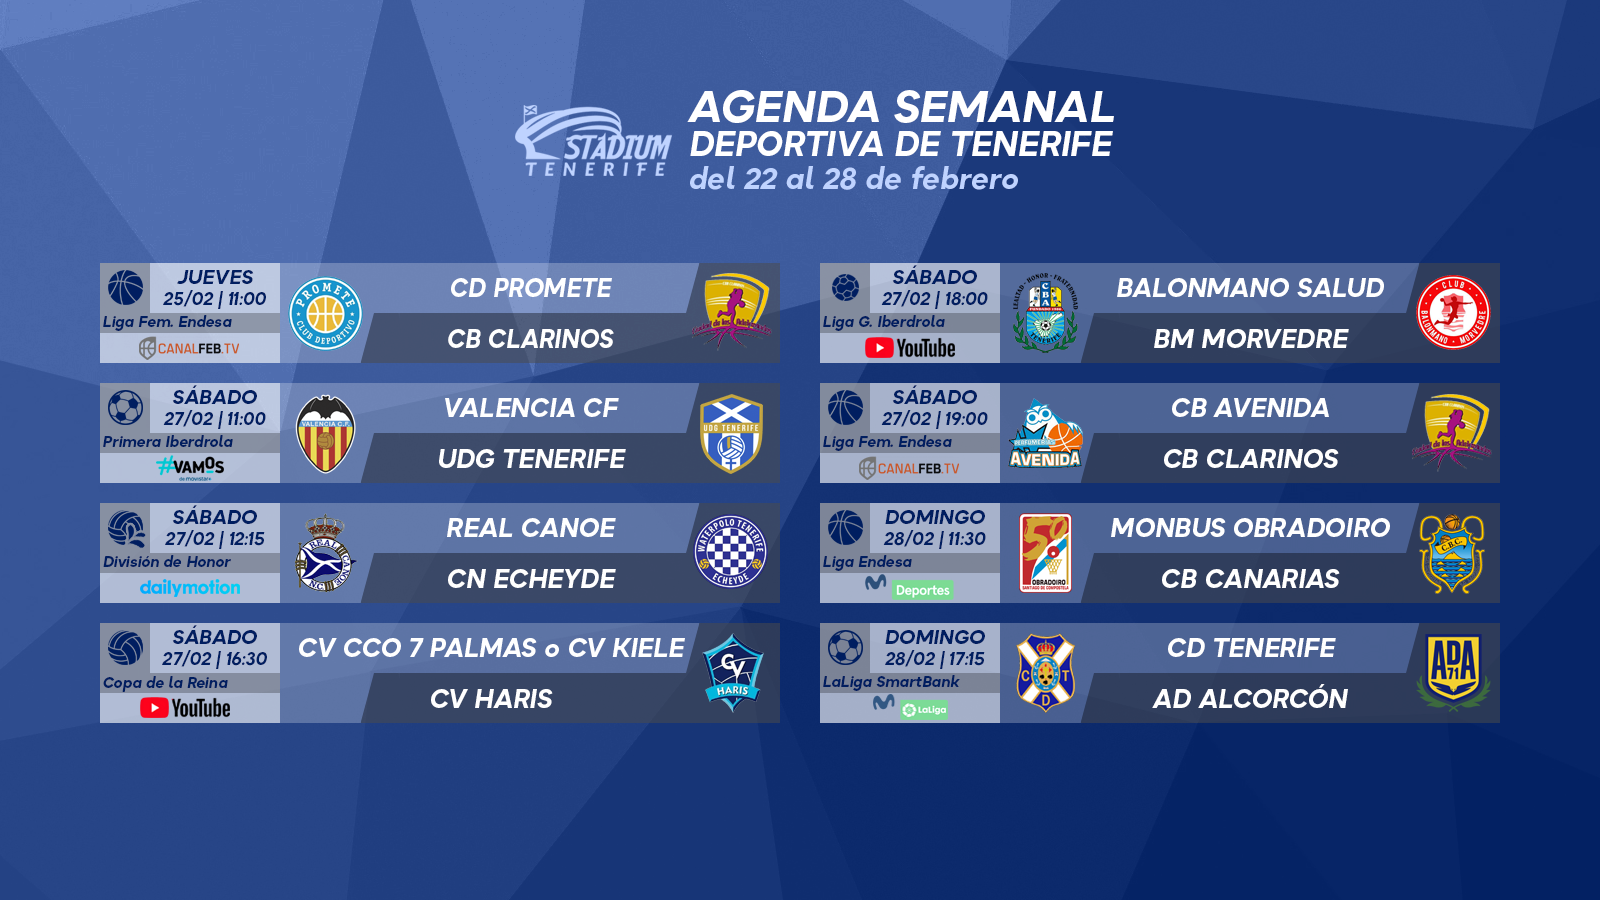 Agenda Semanal Deportiva de Tenerife (22 al 28 de febrero)